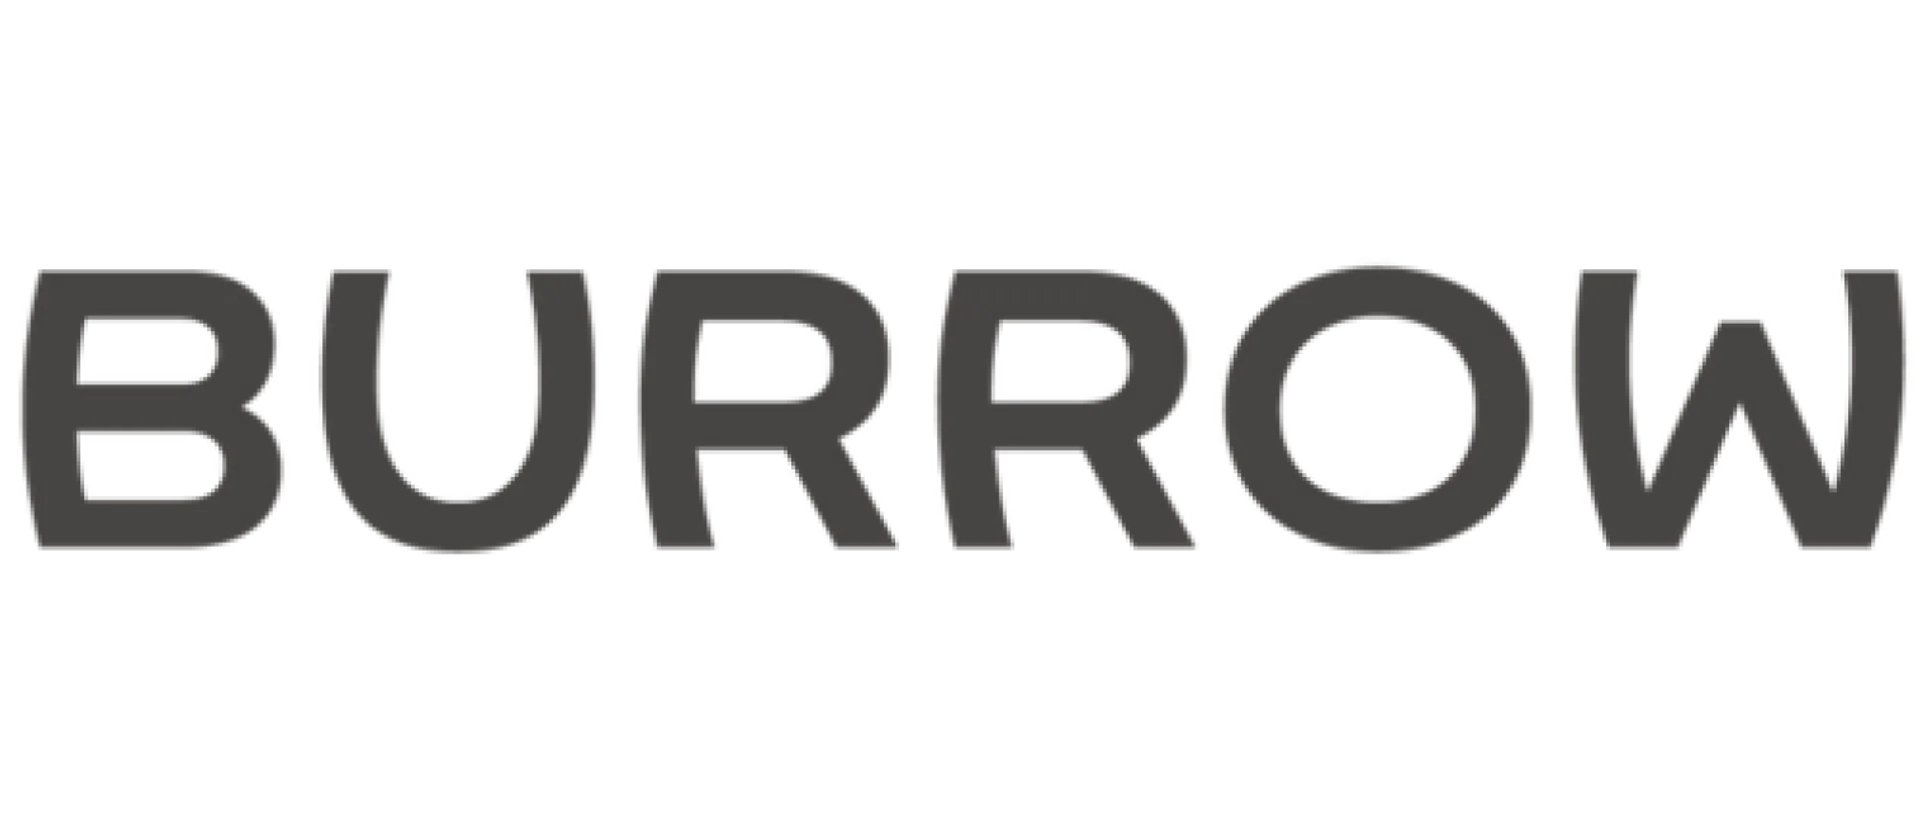 BURROW logo. Current weekly ad